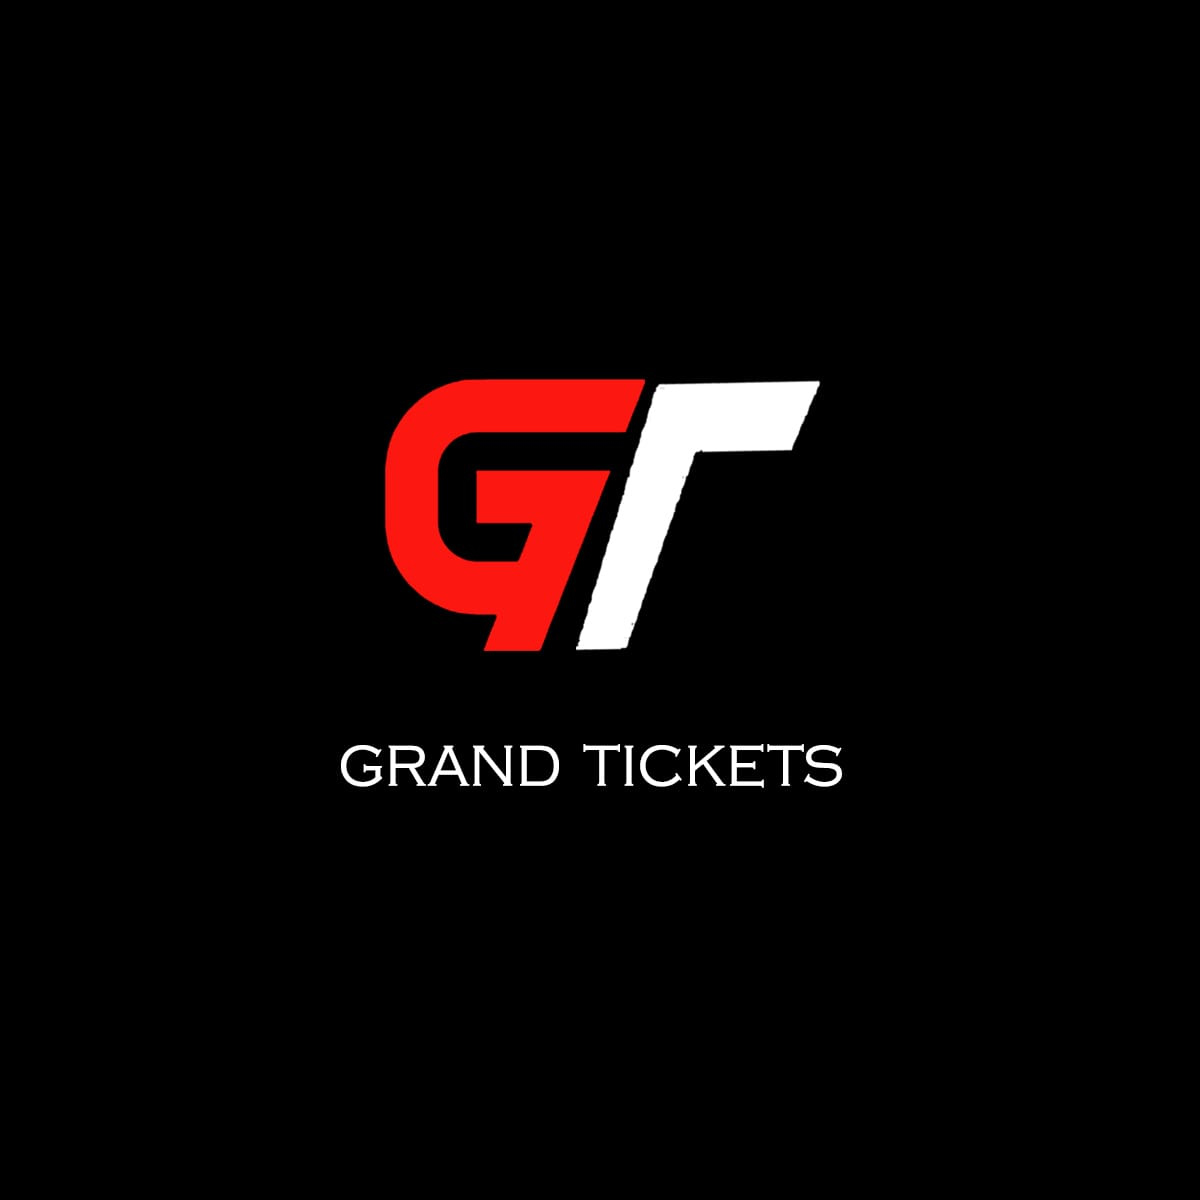 Grand Tickets